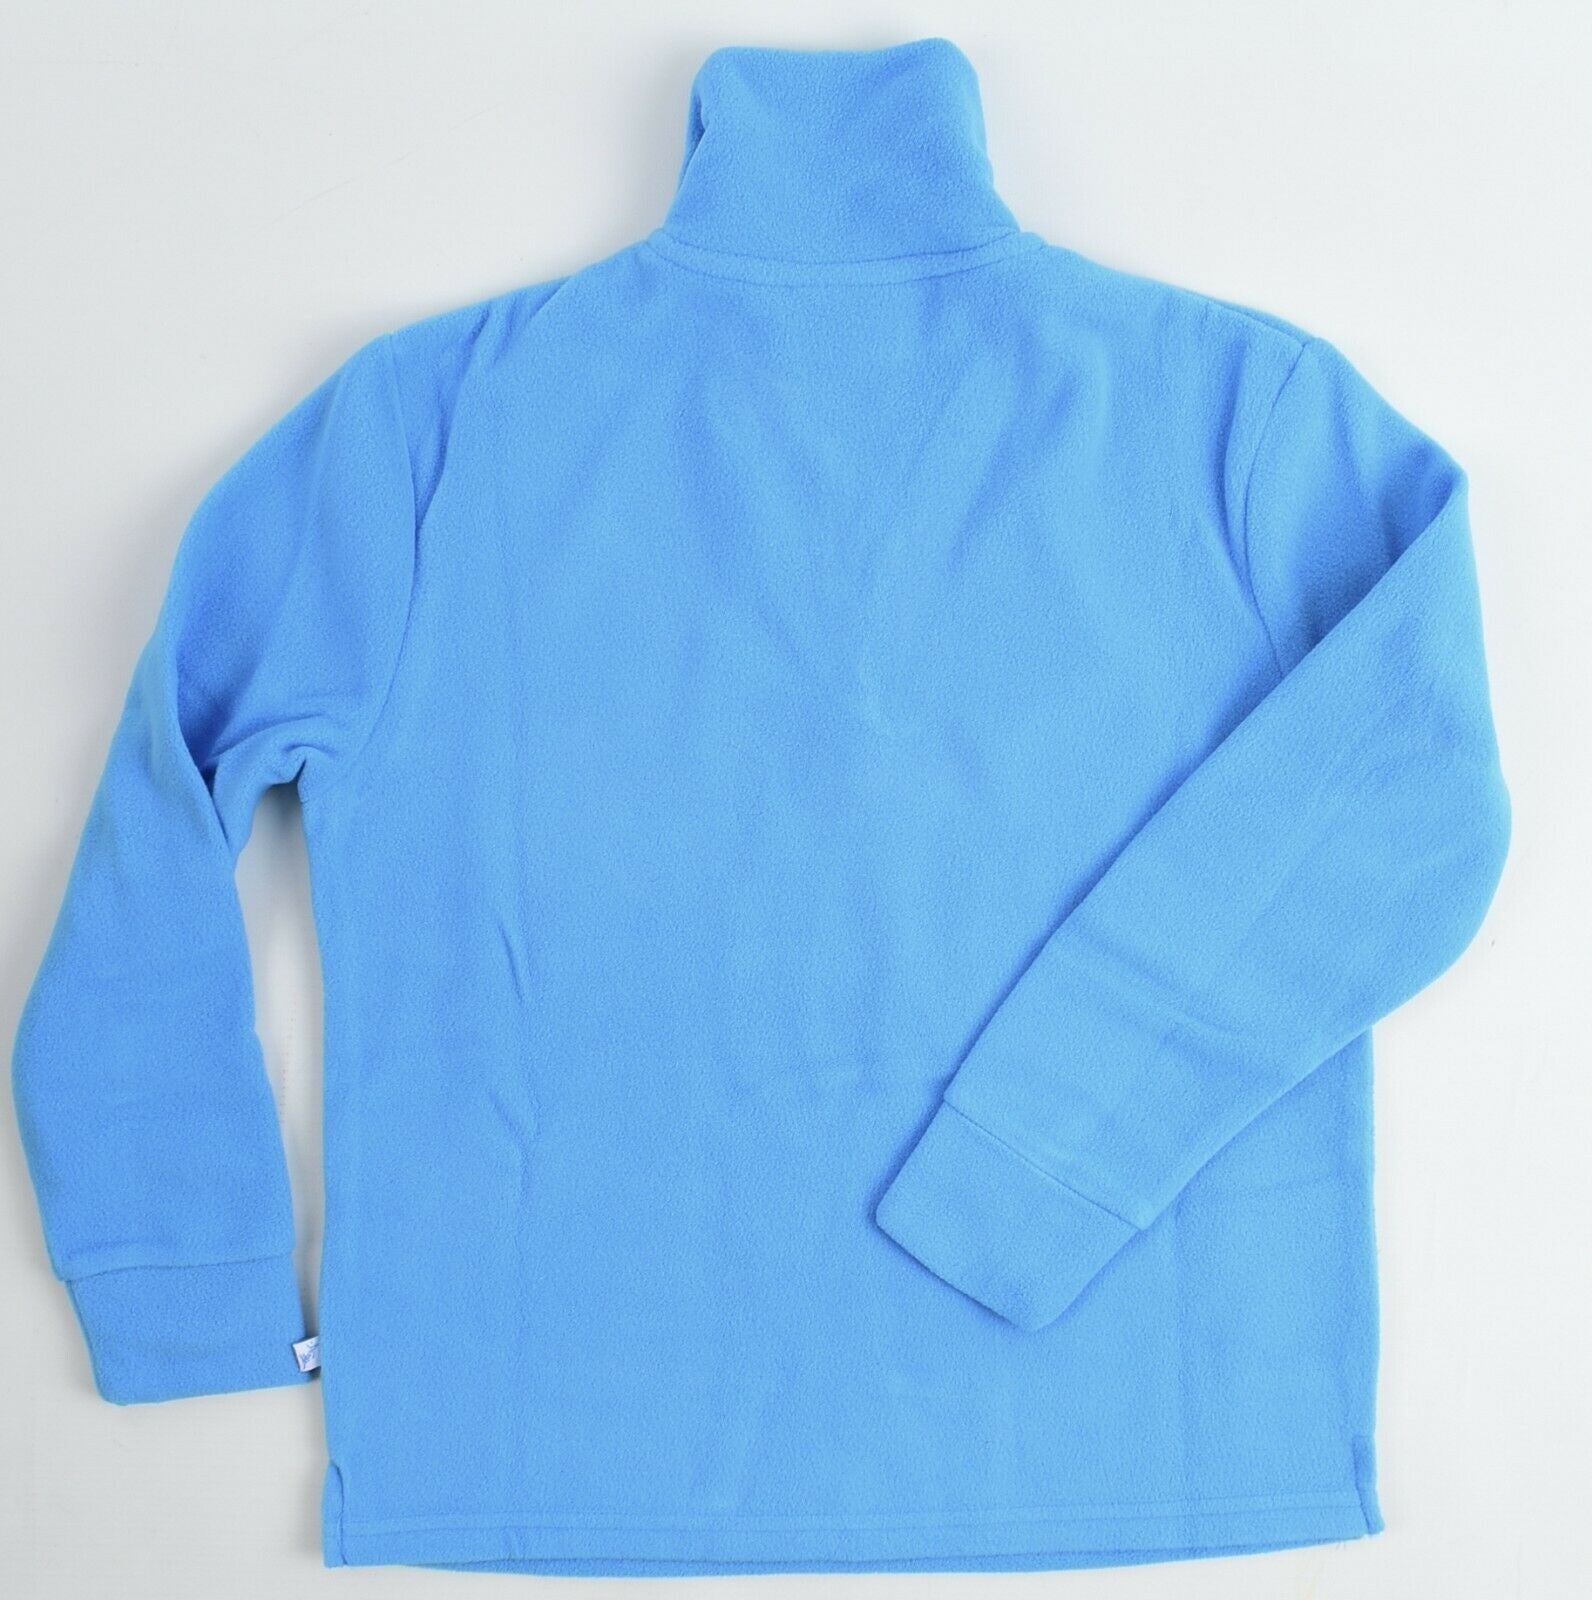 MANBI Boys' Kids' Microfleece Zip Neck Sweatshirt, Blue, size 9-10 years